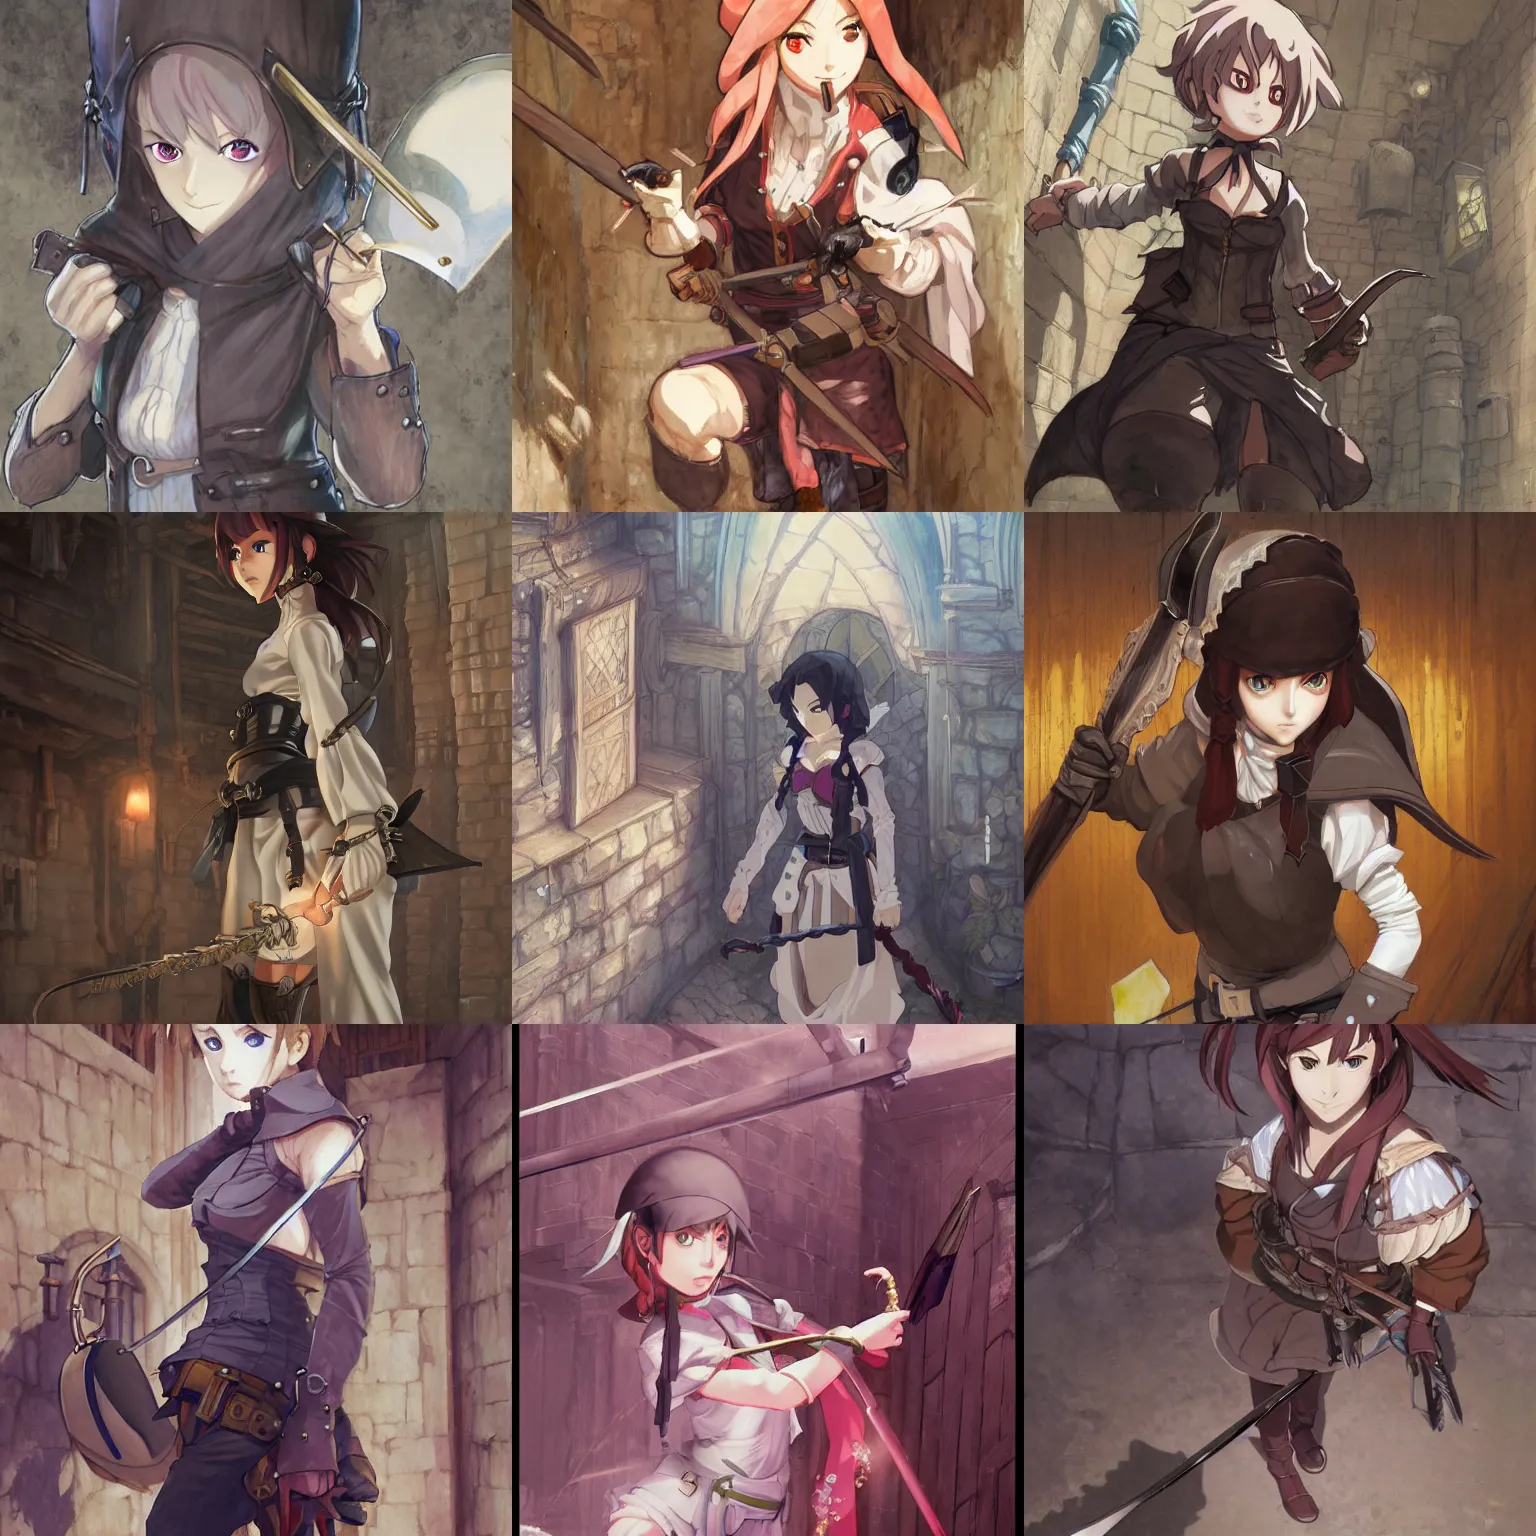 Thief - Anime Manga World Wallpapers and Images - Desktop Nexus Groups